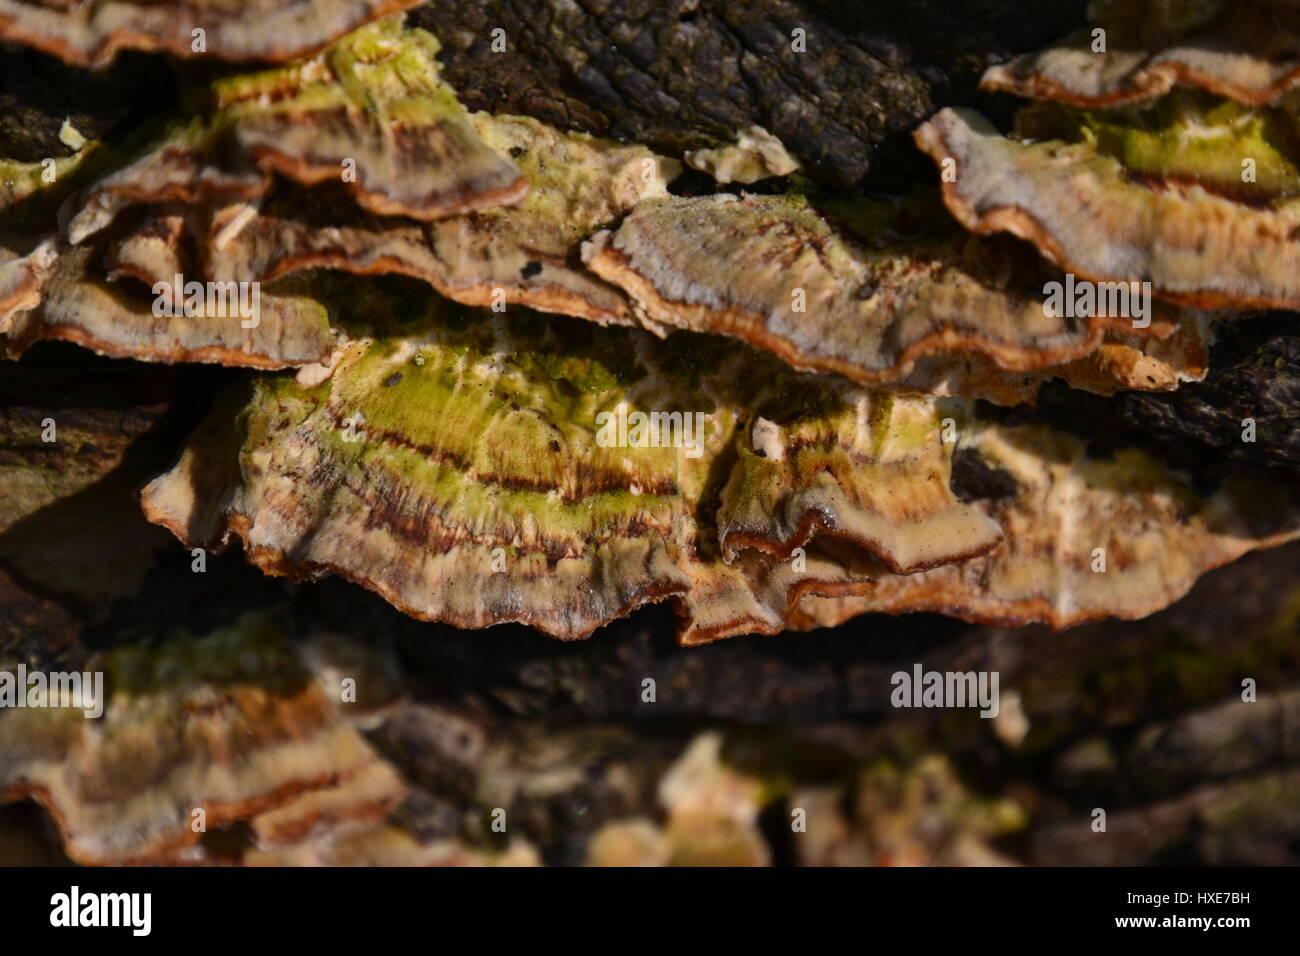 Turkey tail, Trametes versicolor, Coriolus versicolor, Polyporus versicolor, bracket fungus. Stock Photo